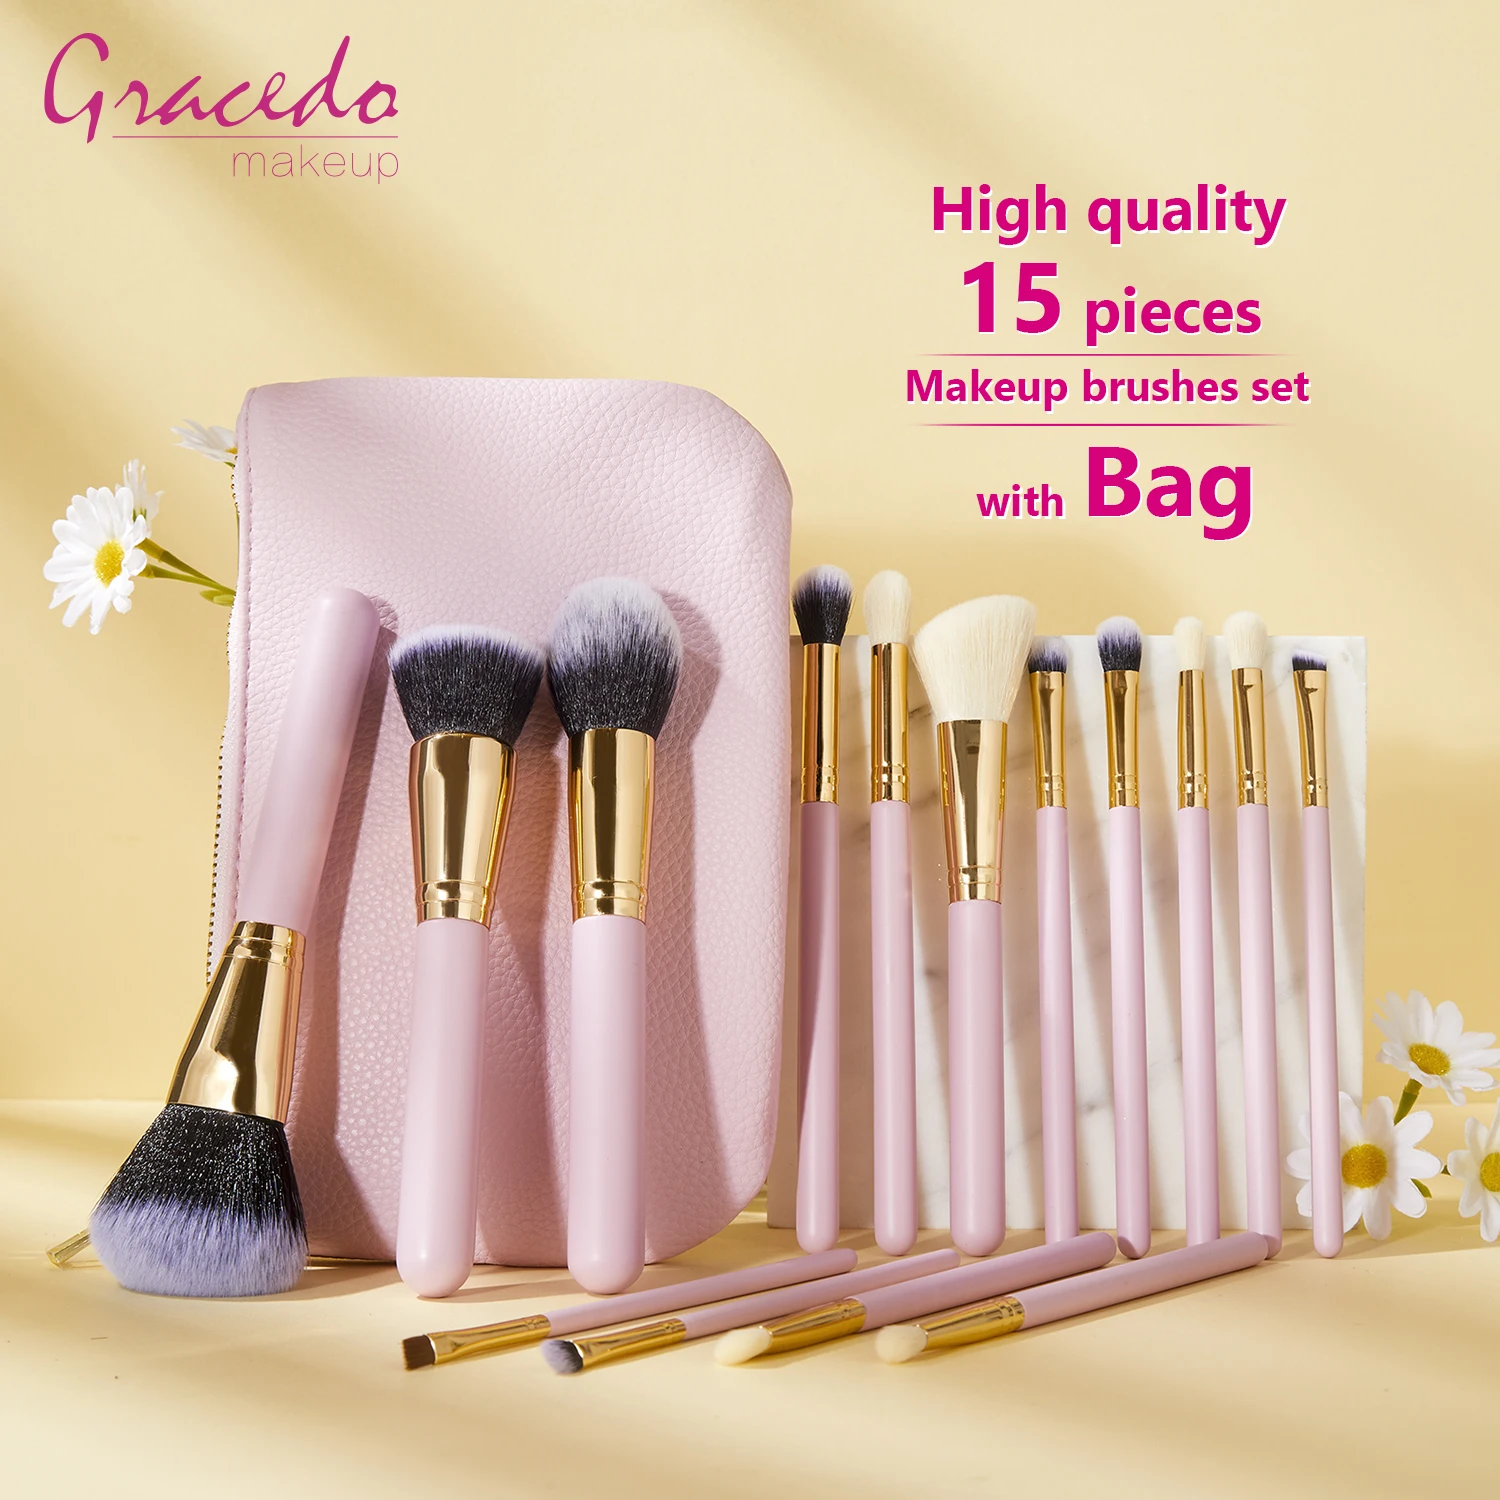 Gracedo cute makeup brush set wood eco friendly pro personalised best selling high quality makeup brush set